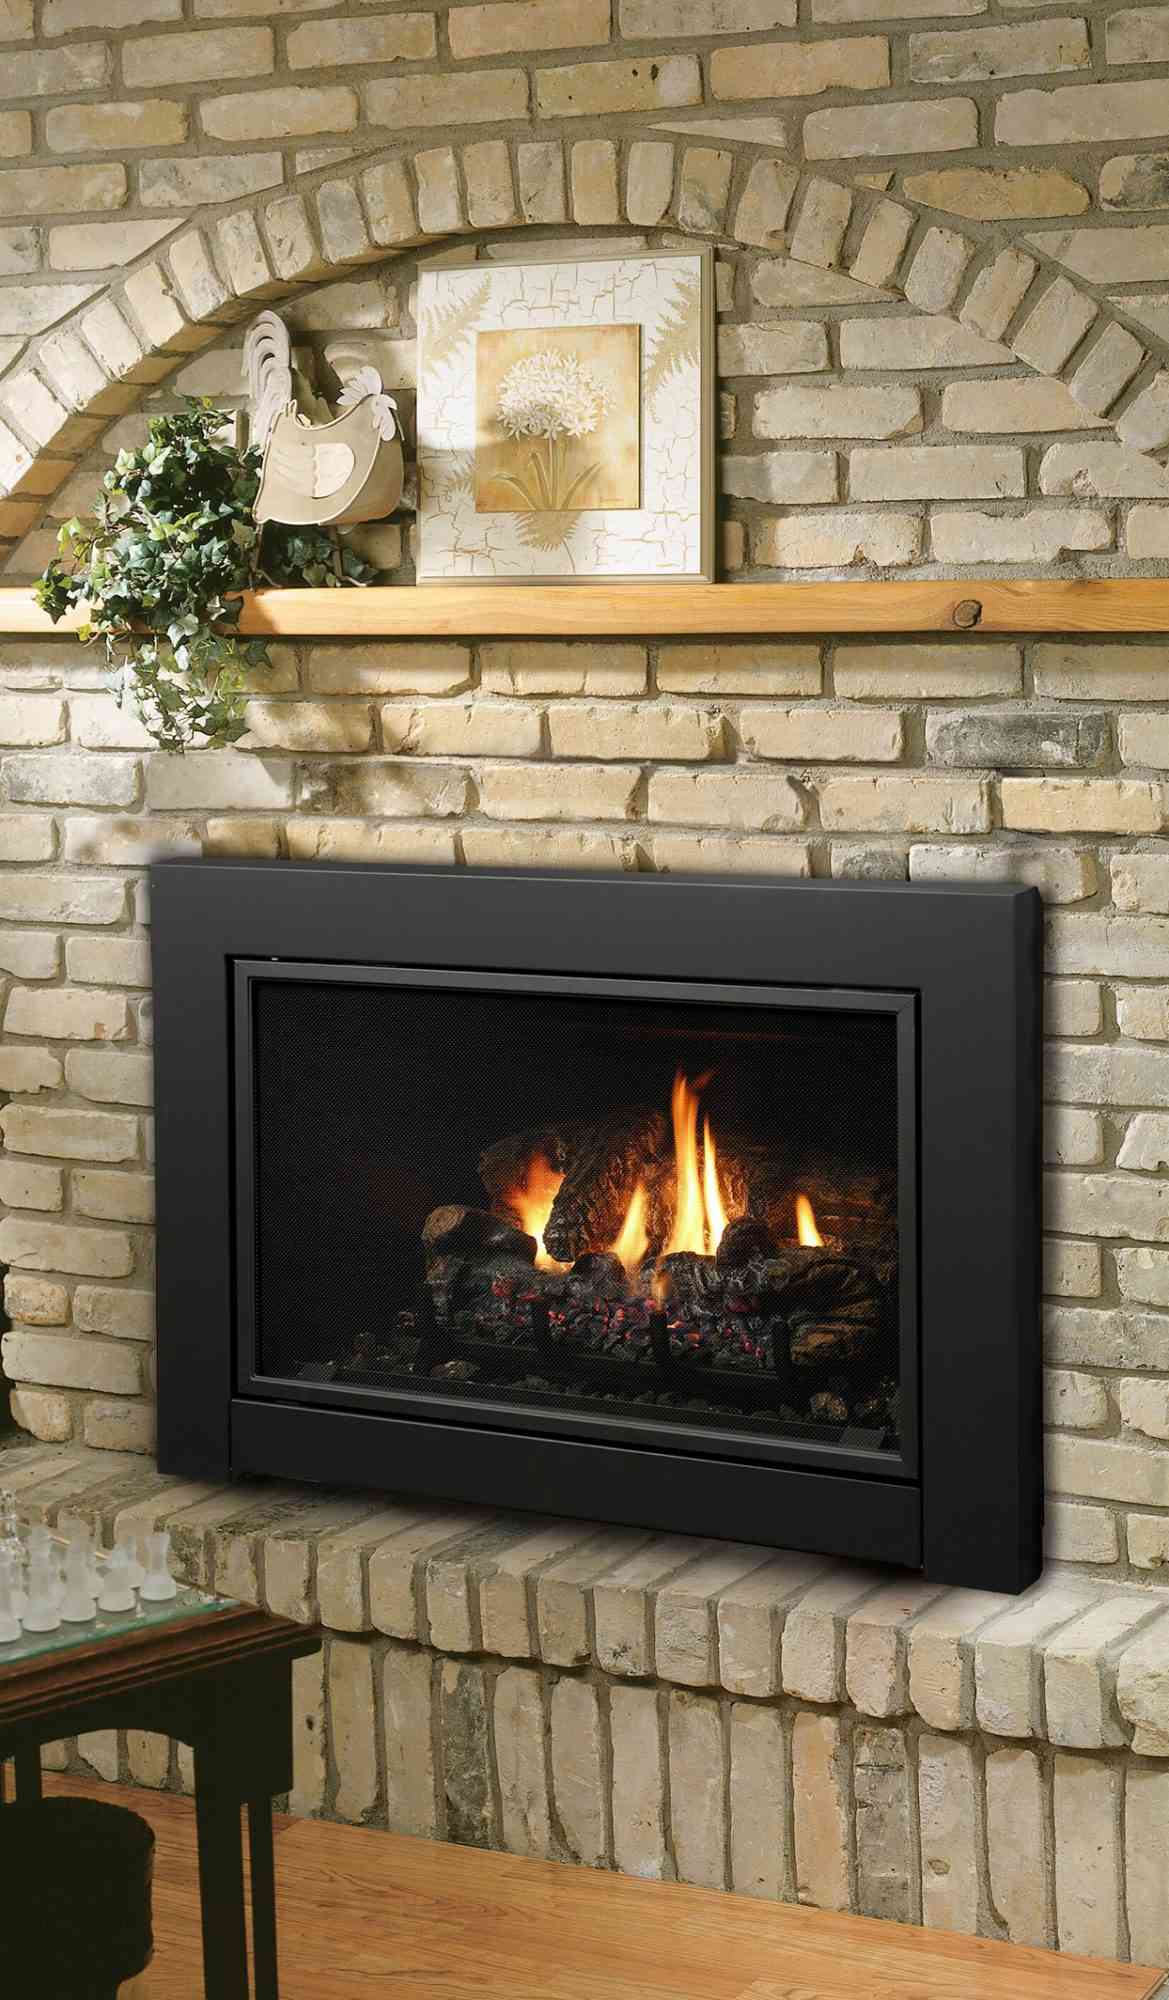 gas fireplace insert with white brick fireplace surround